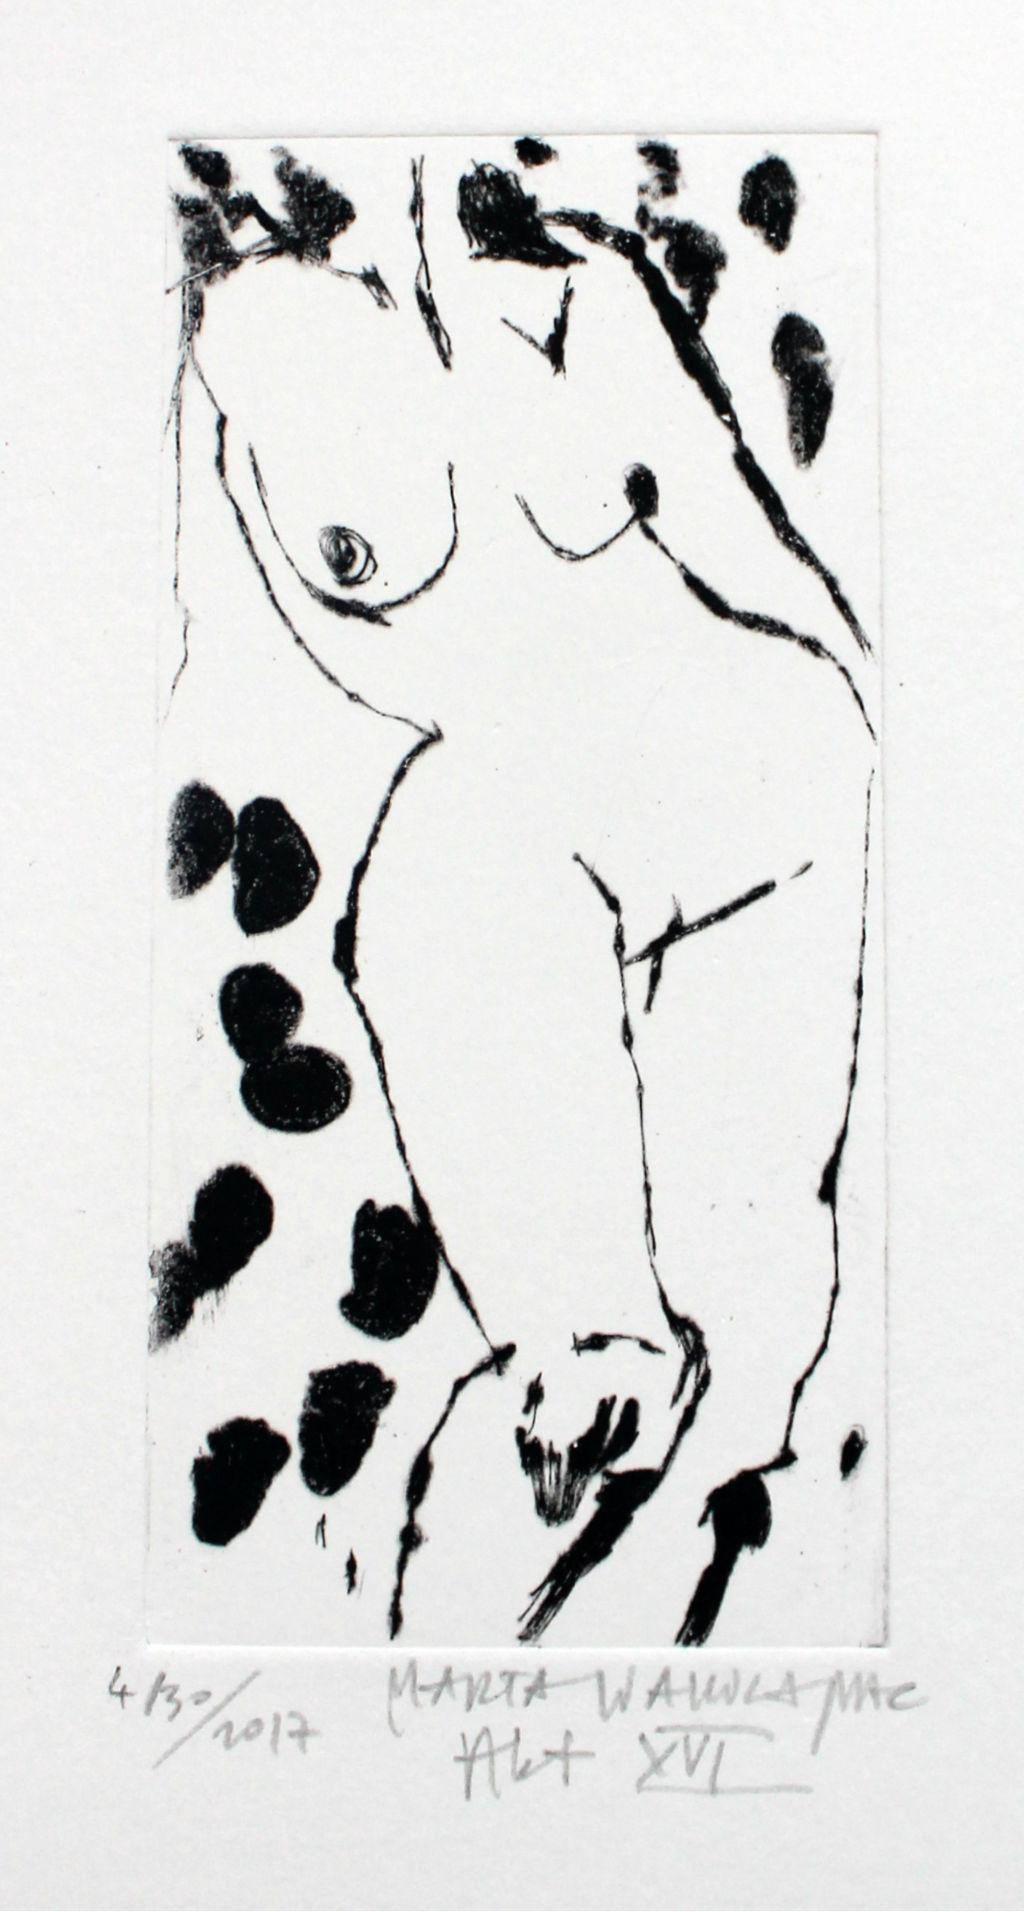 Marta Wakula-Mac Figurative Print - Nude XVI - XXI Century, Contemporary Figurative Drypoint Etching Print